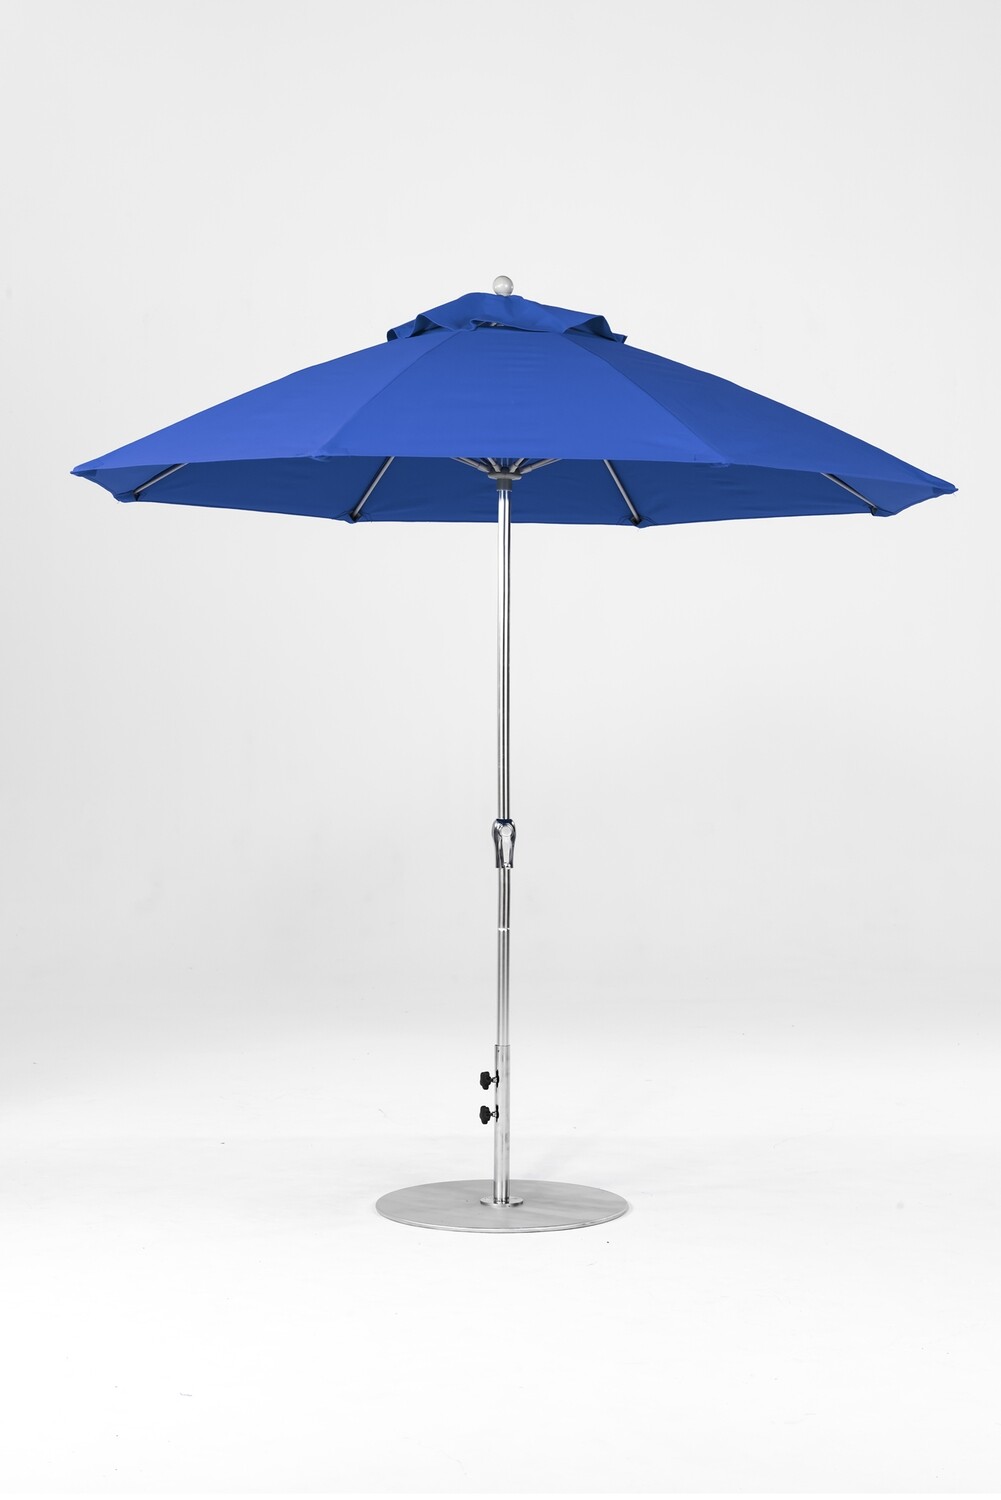 Monterey Round  Fiberglass Market Umbrella with Crank Lift